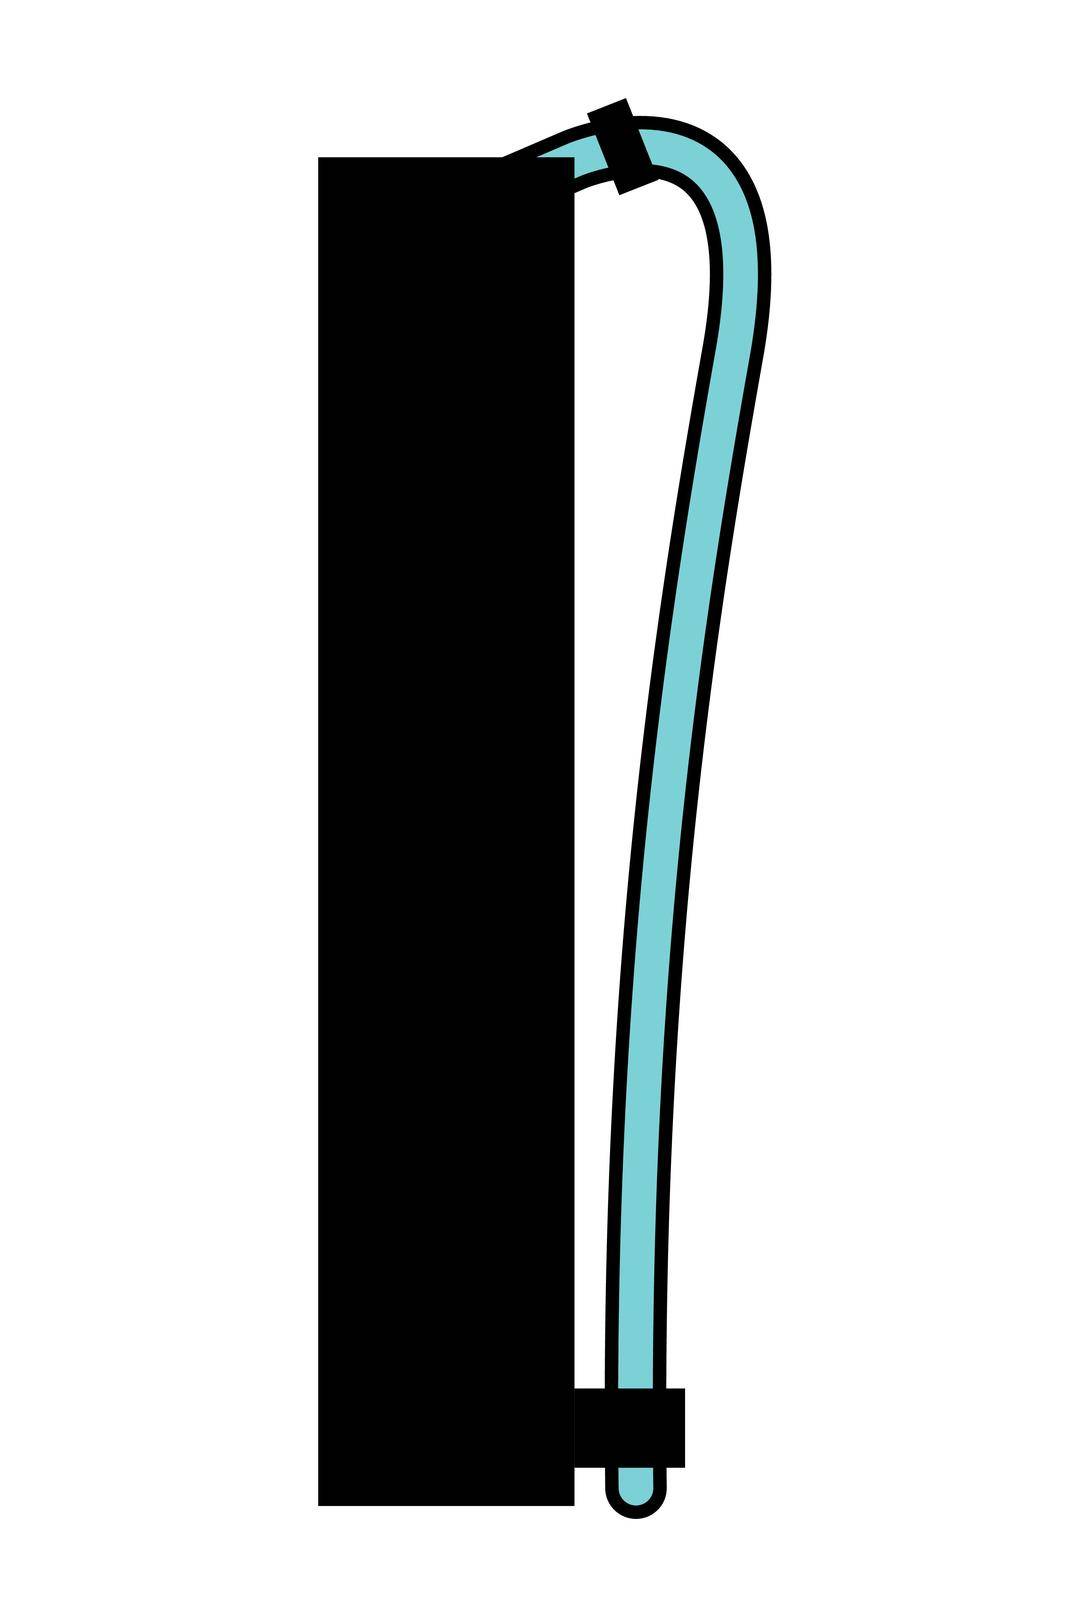 Stick and clubs holder for rhythmic gymnastics pictogram vector illustration.